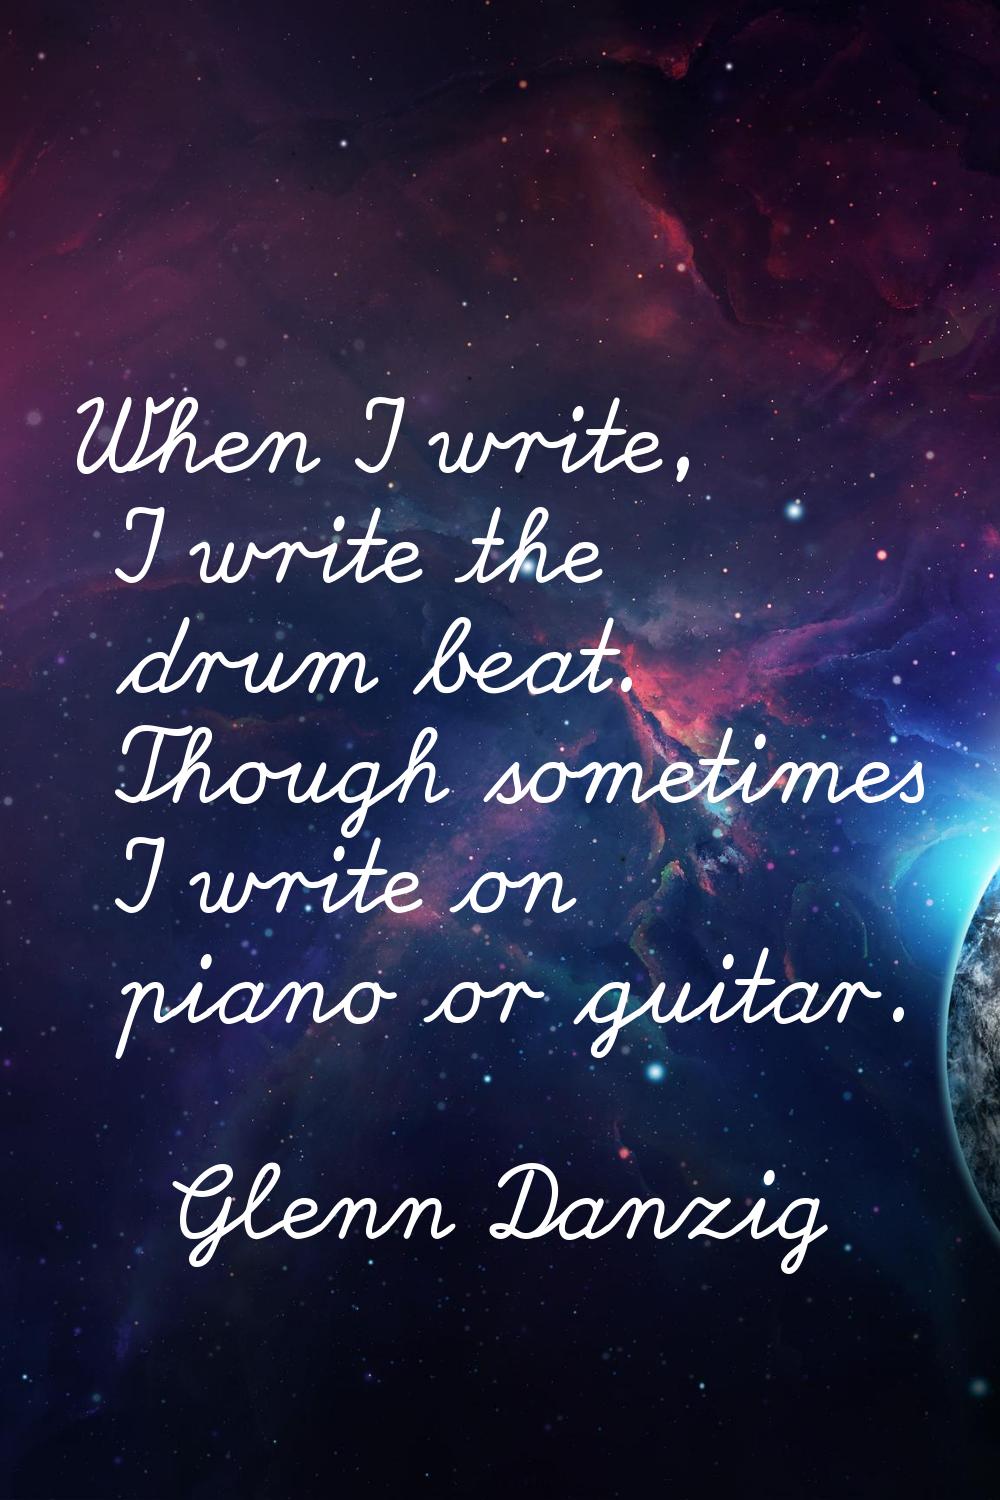 When I write, I write the drum beat. Though sometimes I write on piano or guitar.